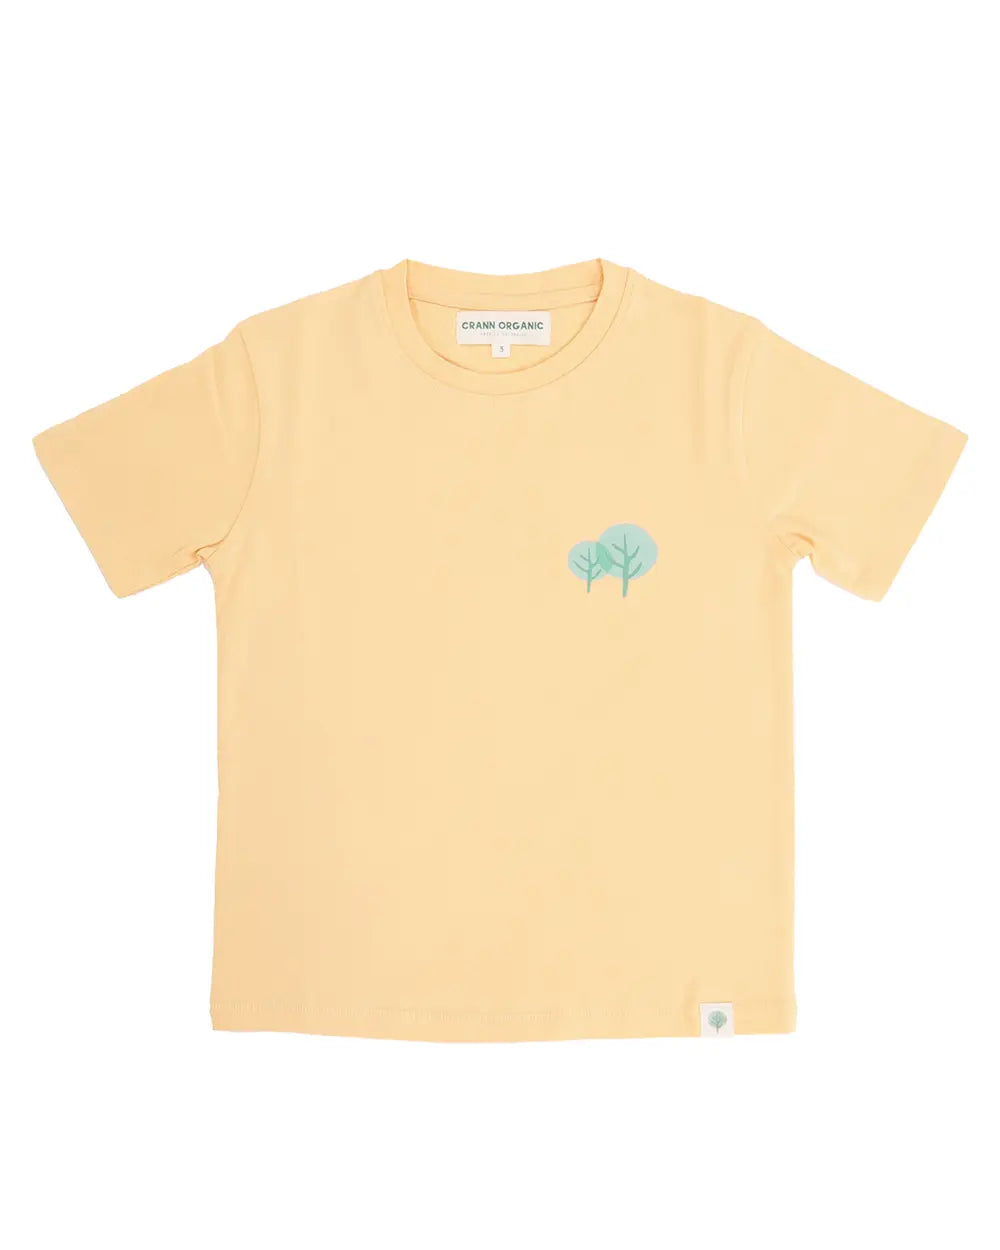 Kids' Organic Cotton Yellow T-Shirt - Crann Organic